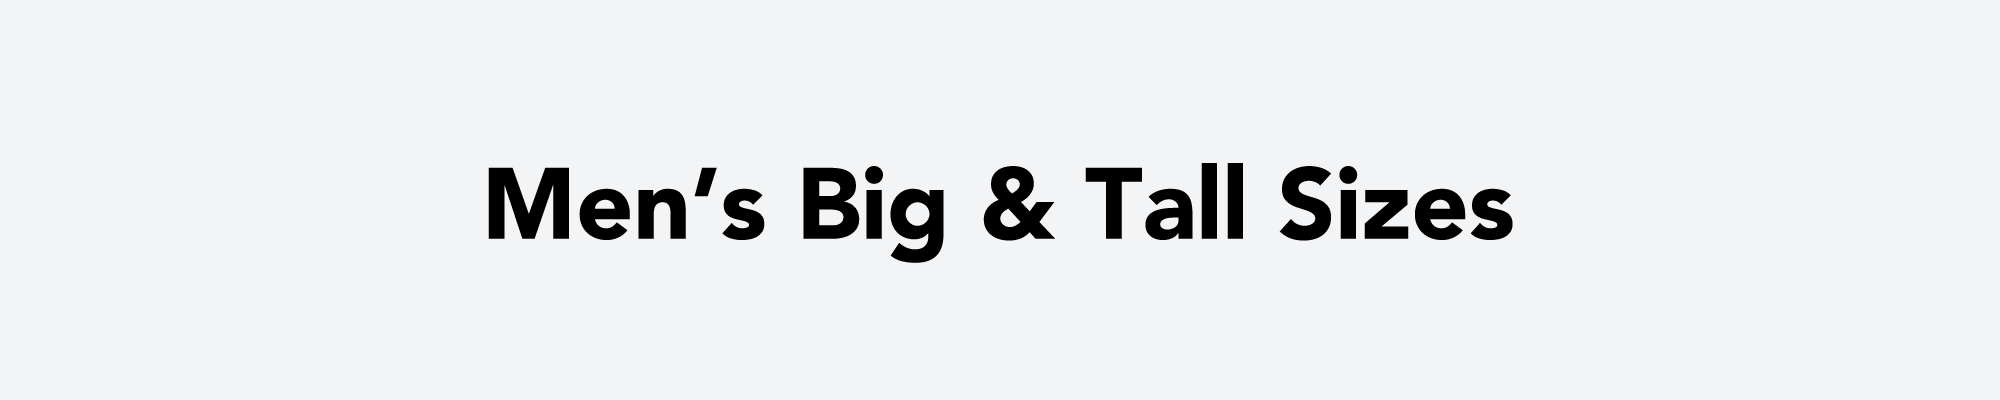 Men's Big & Tall Sizes